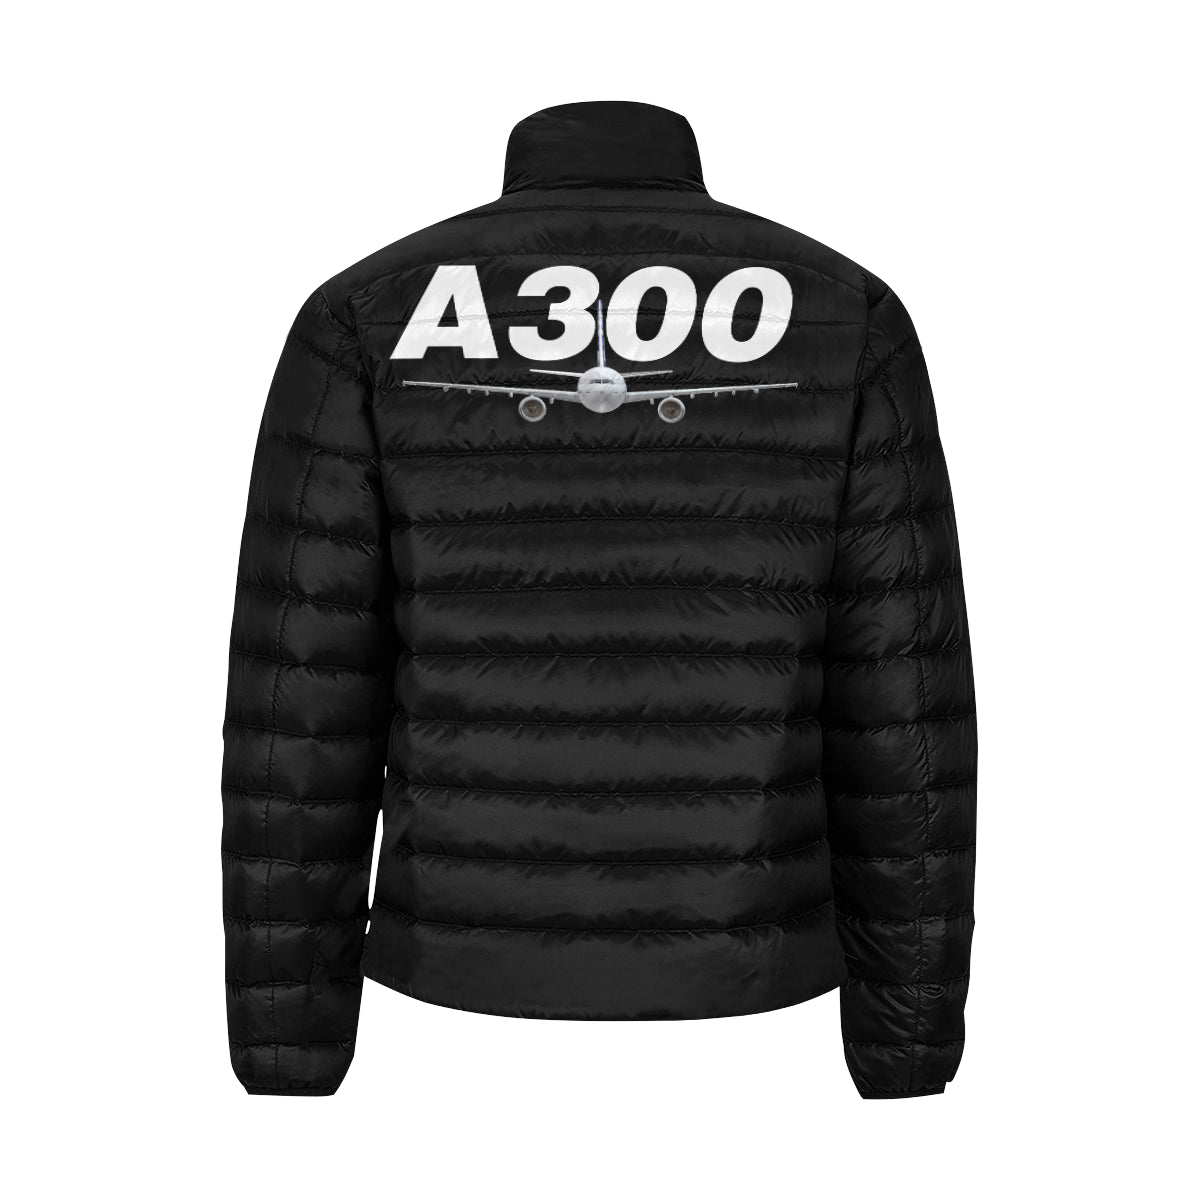 AIRBUS 300 Men's Stand Collar Padded Jacket e-joyer